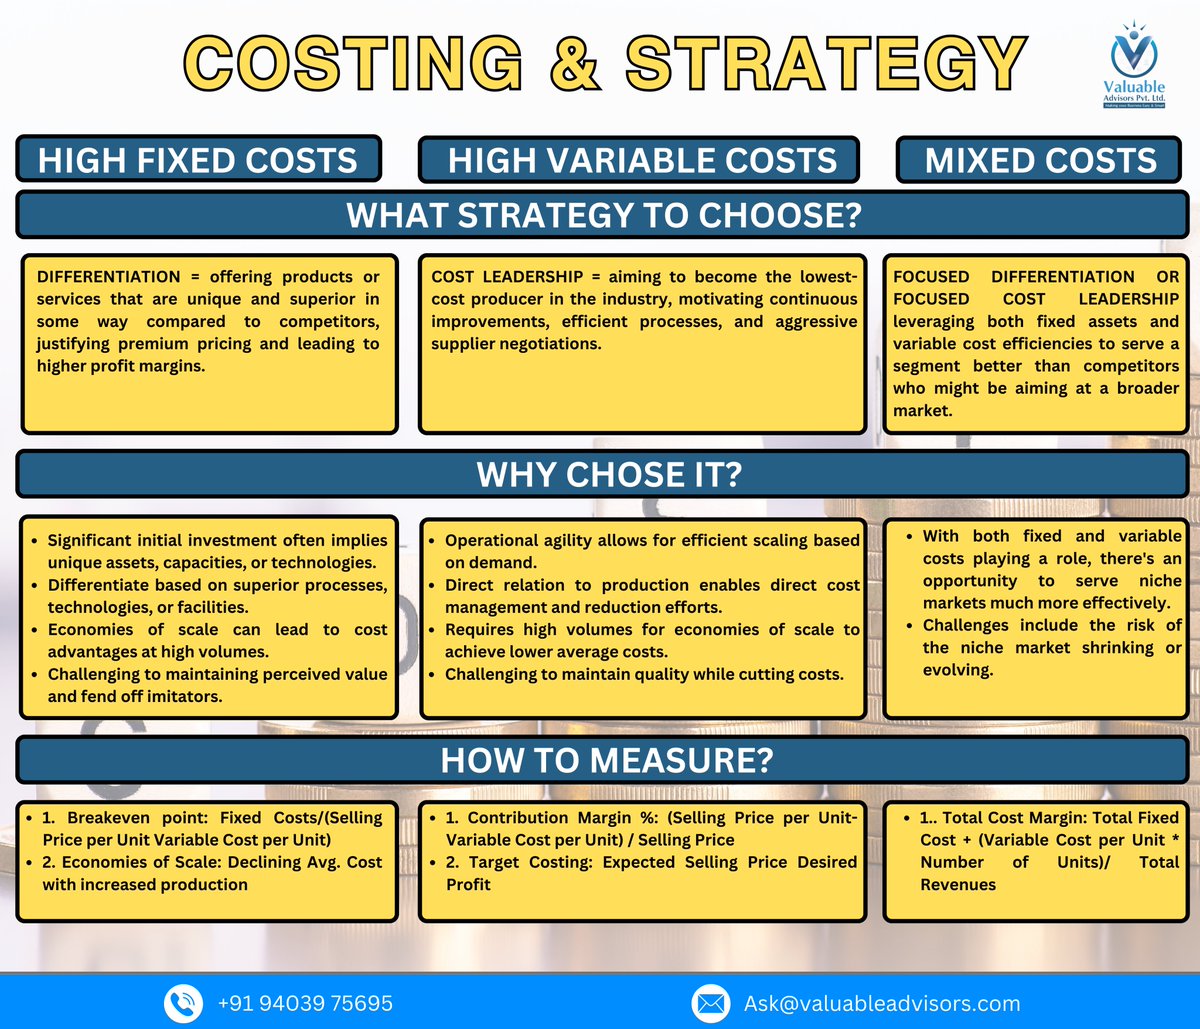 COSTING & STRATEGY.💸👨‍💼
#costing #costmanagement #costmanagementaccountant #costcontrol #AzamKhan  #NZVsAfg #UT69Trailer #hospital  #businessstrategy #vapl #businessstrategytips #businessstrategycoach #businessstrategydesign